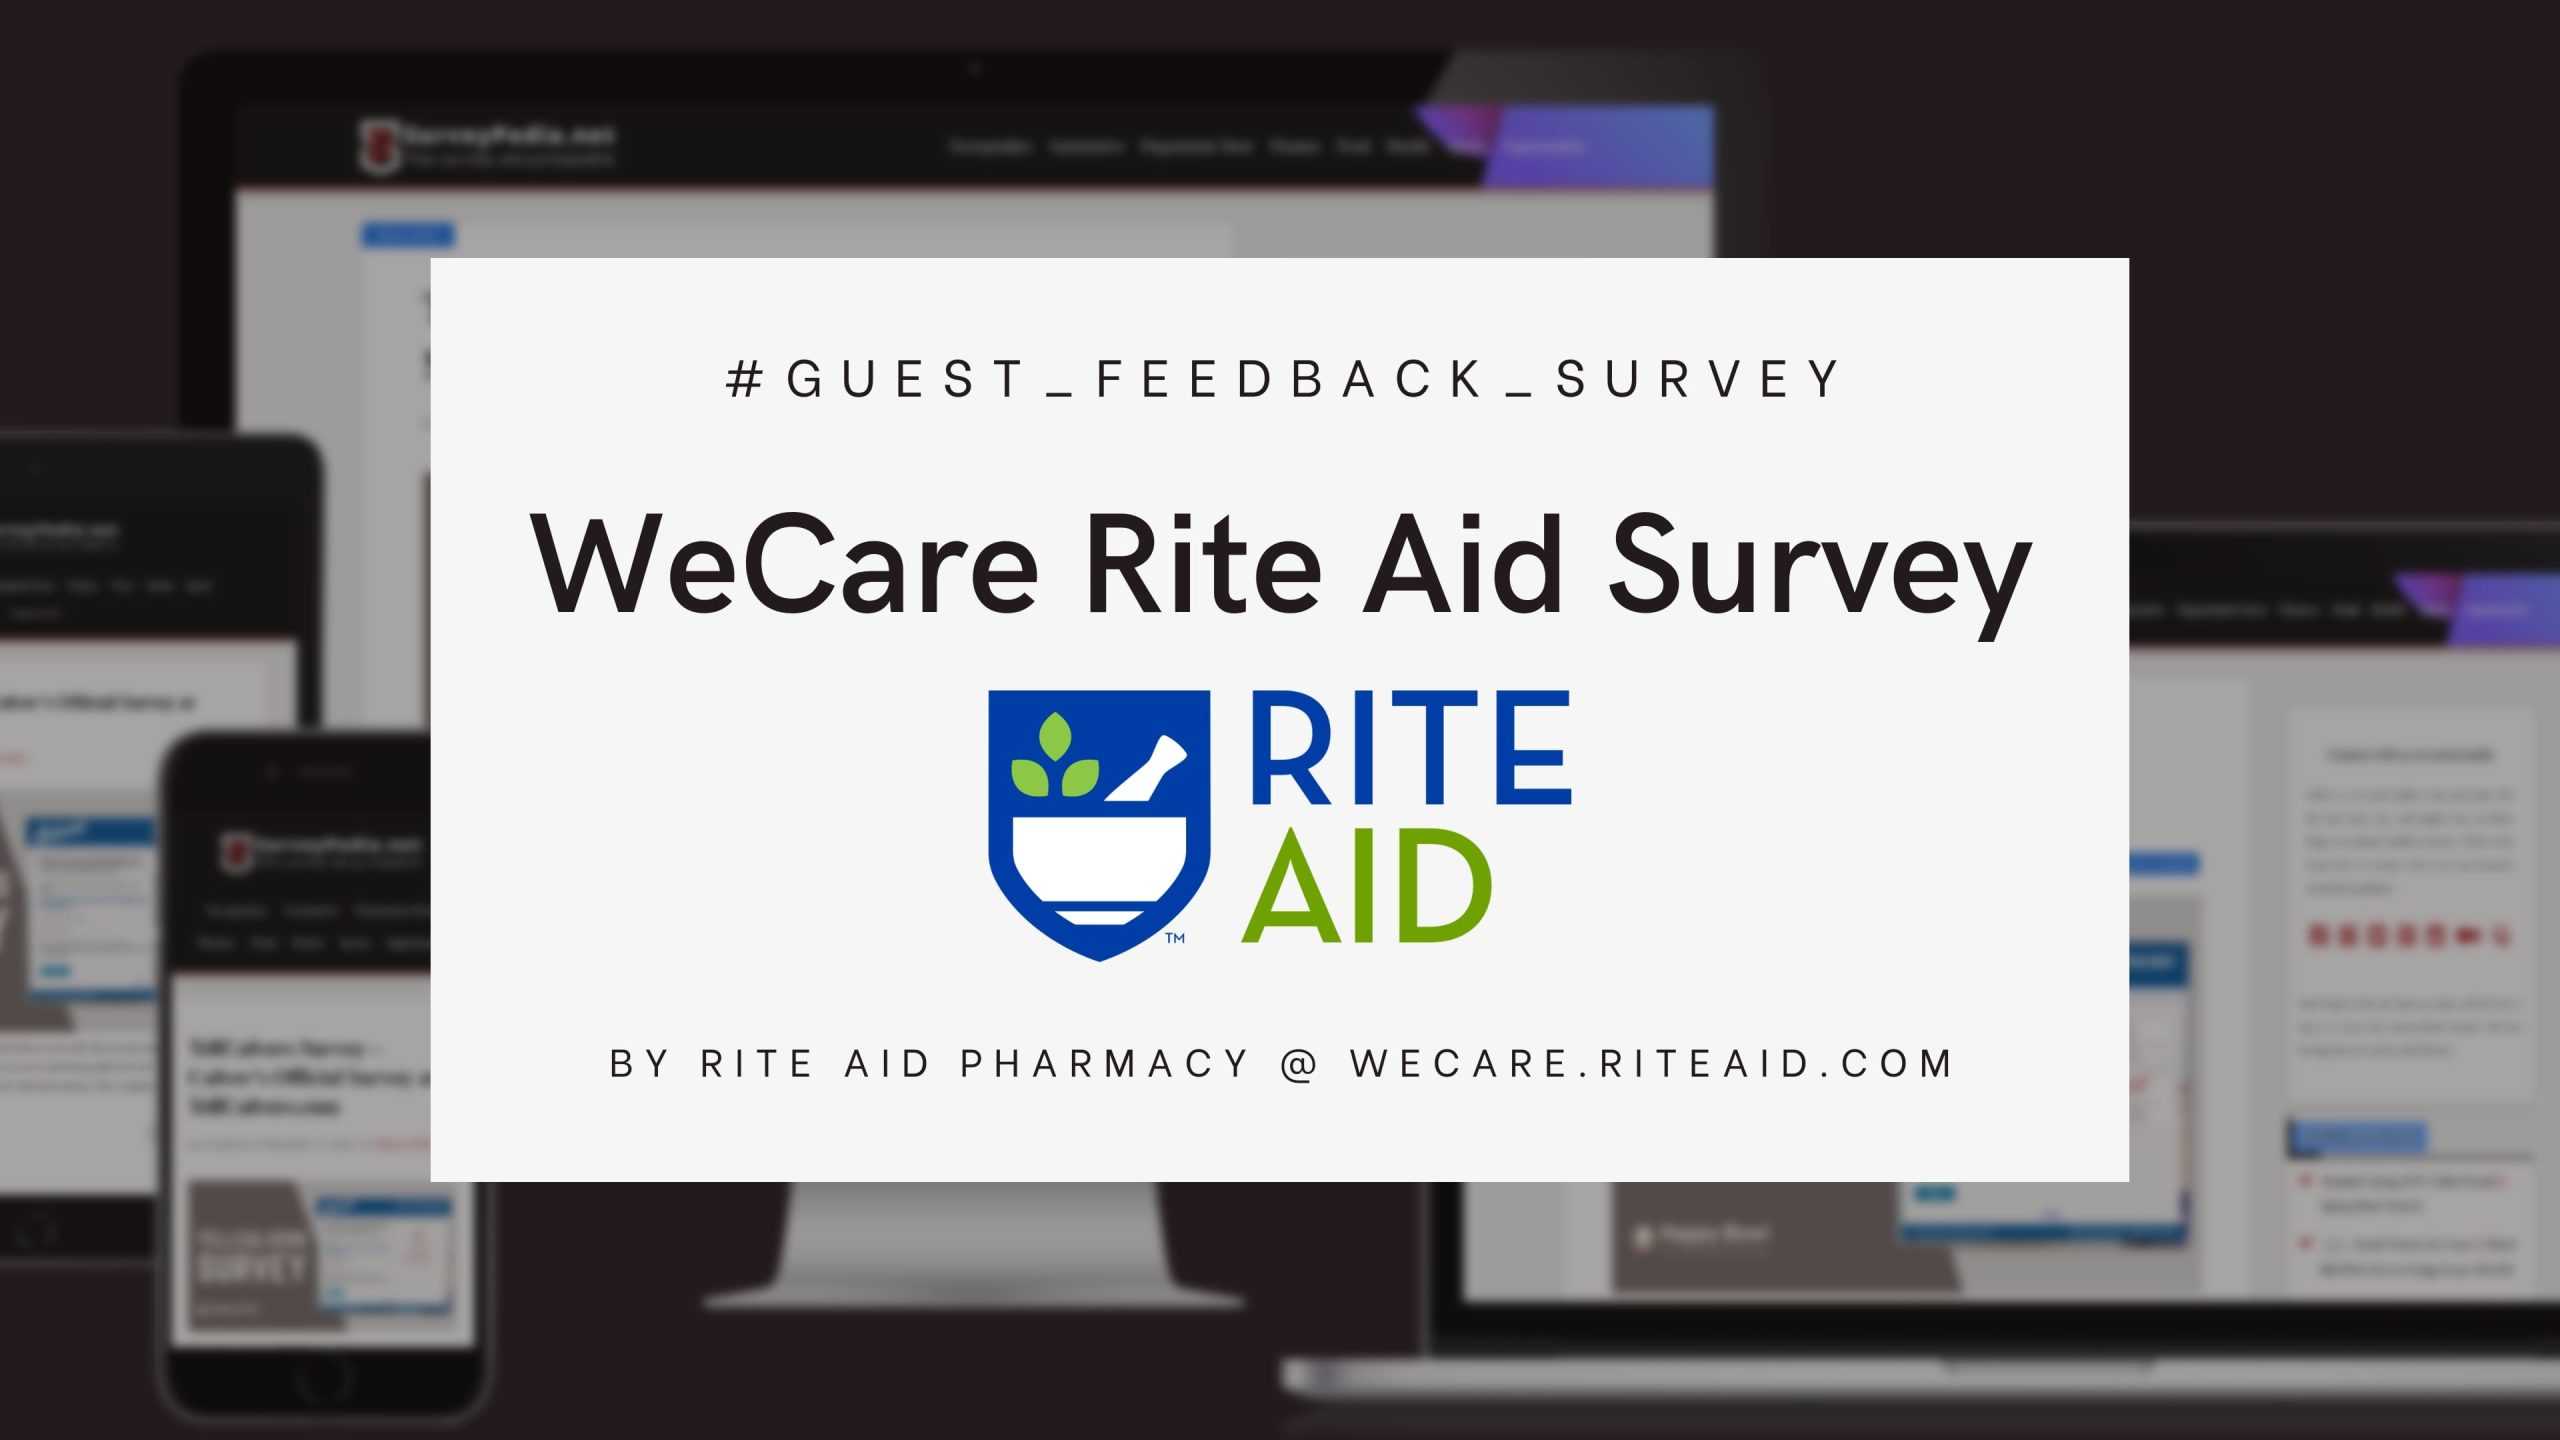 WeCare Rite Aid Survey: Rite Aid Customer Satisfaction Survey at WeCare.RiteAid.Com